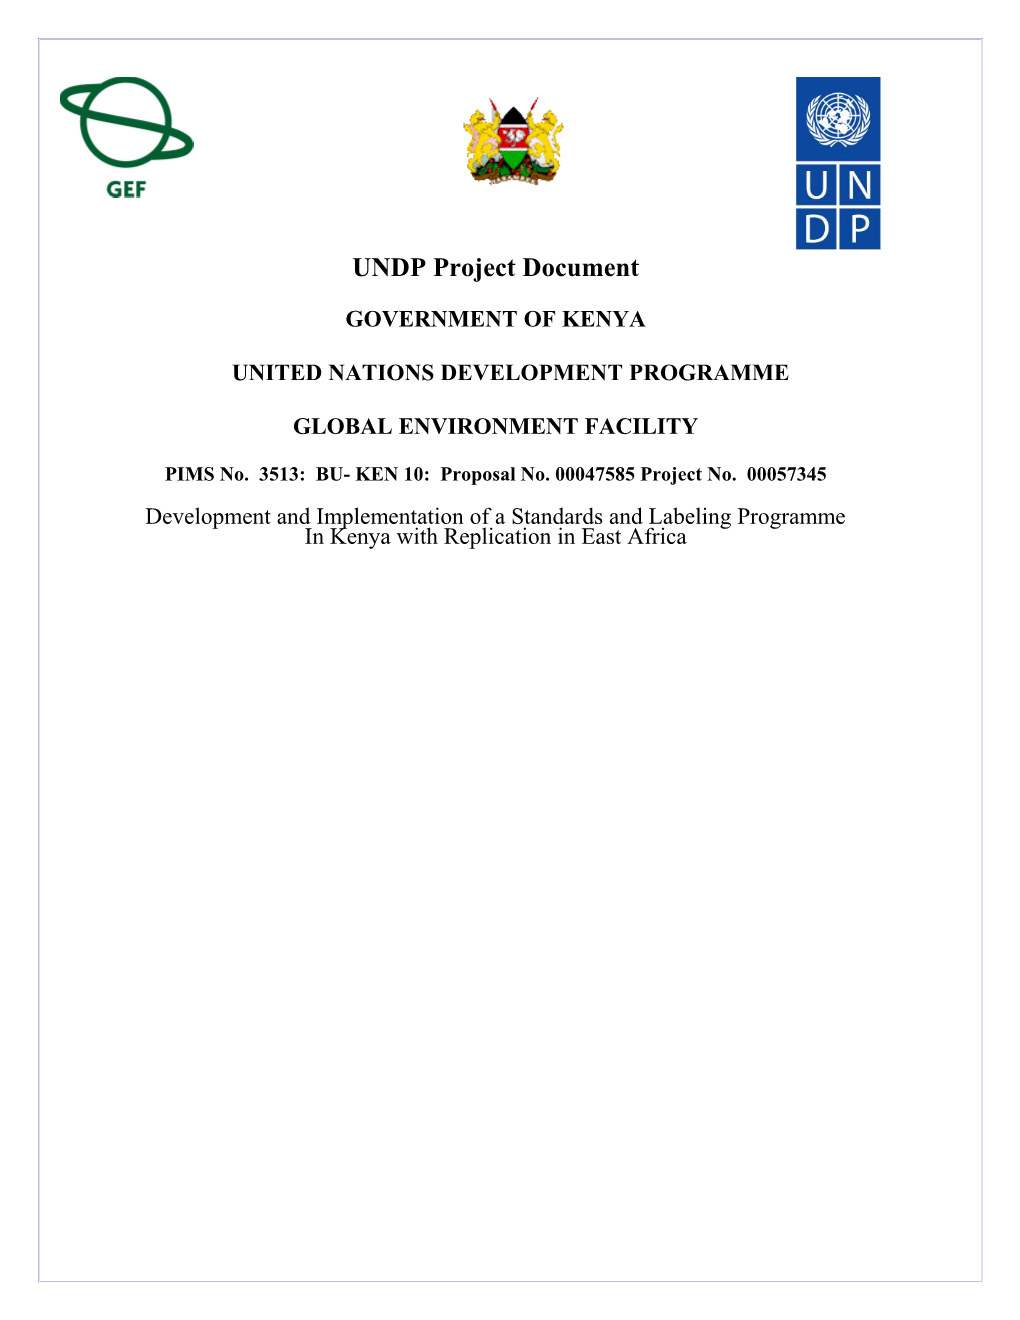 UNDP Project Document s3